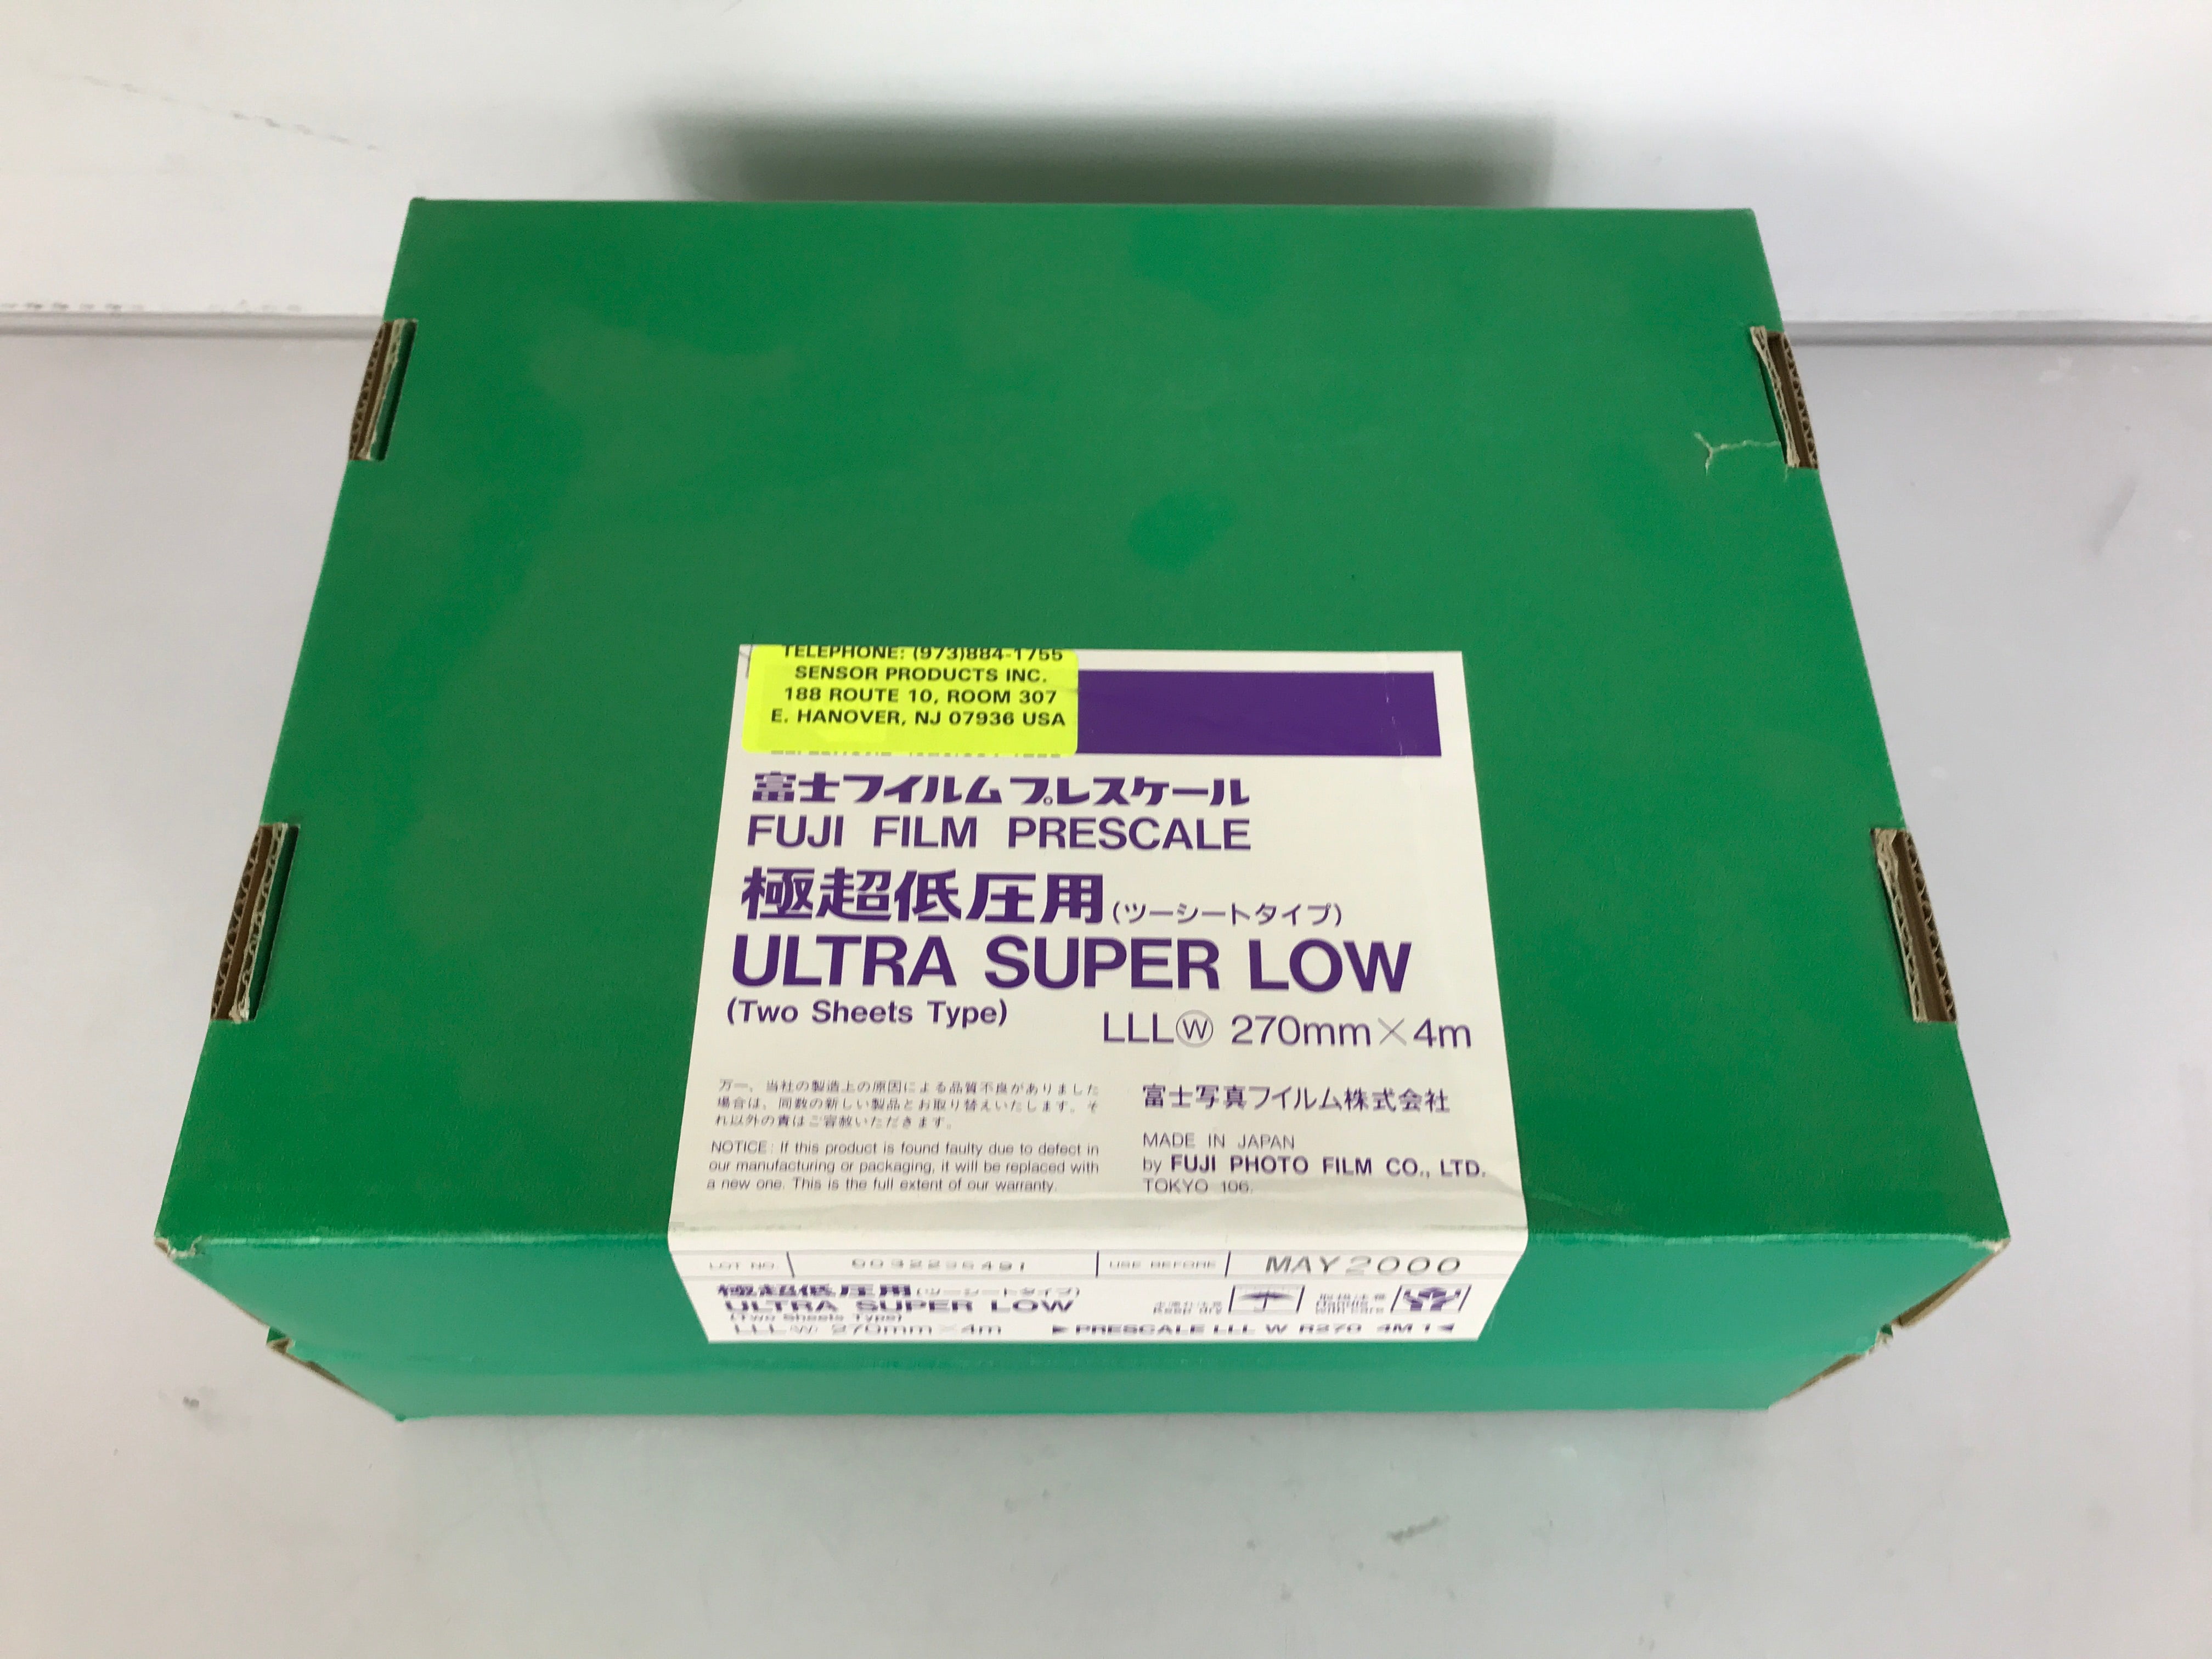 Expired Fuji Film Prescale Ultra Super Low LLLW 270mm x 4m #2